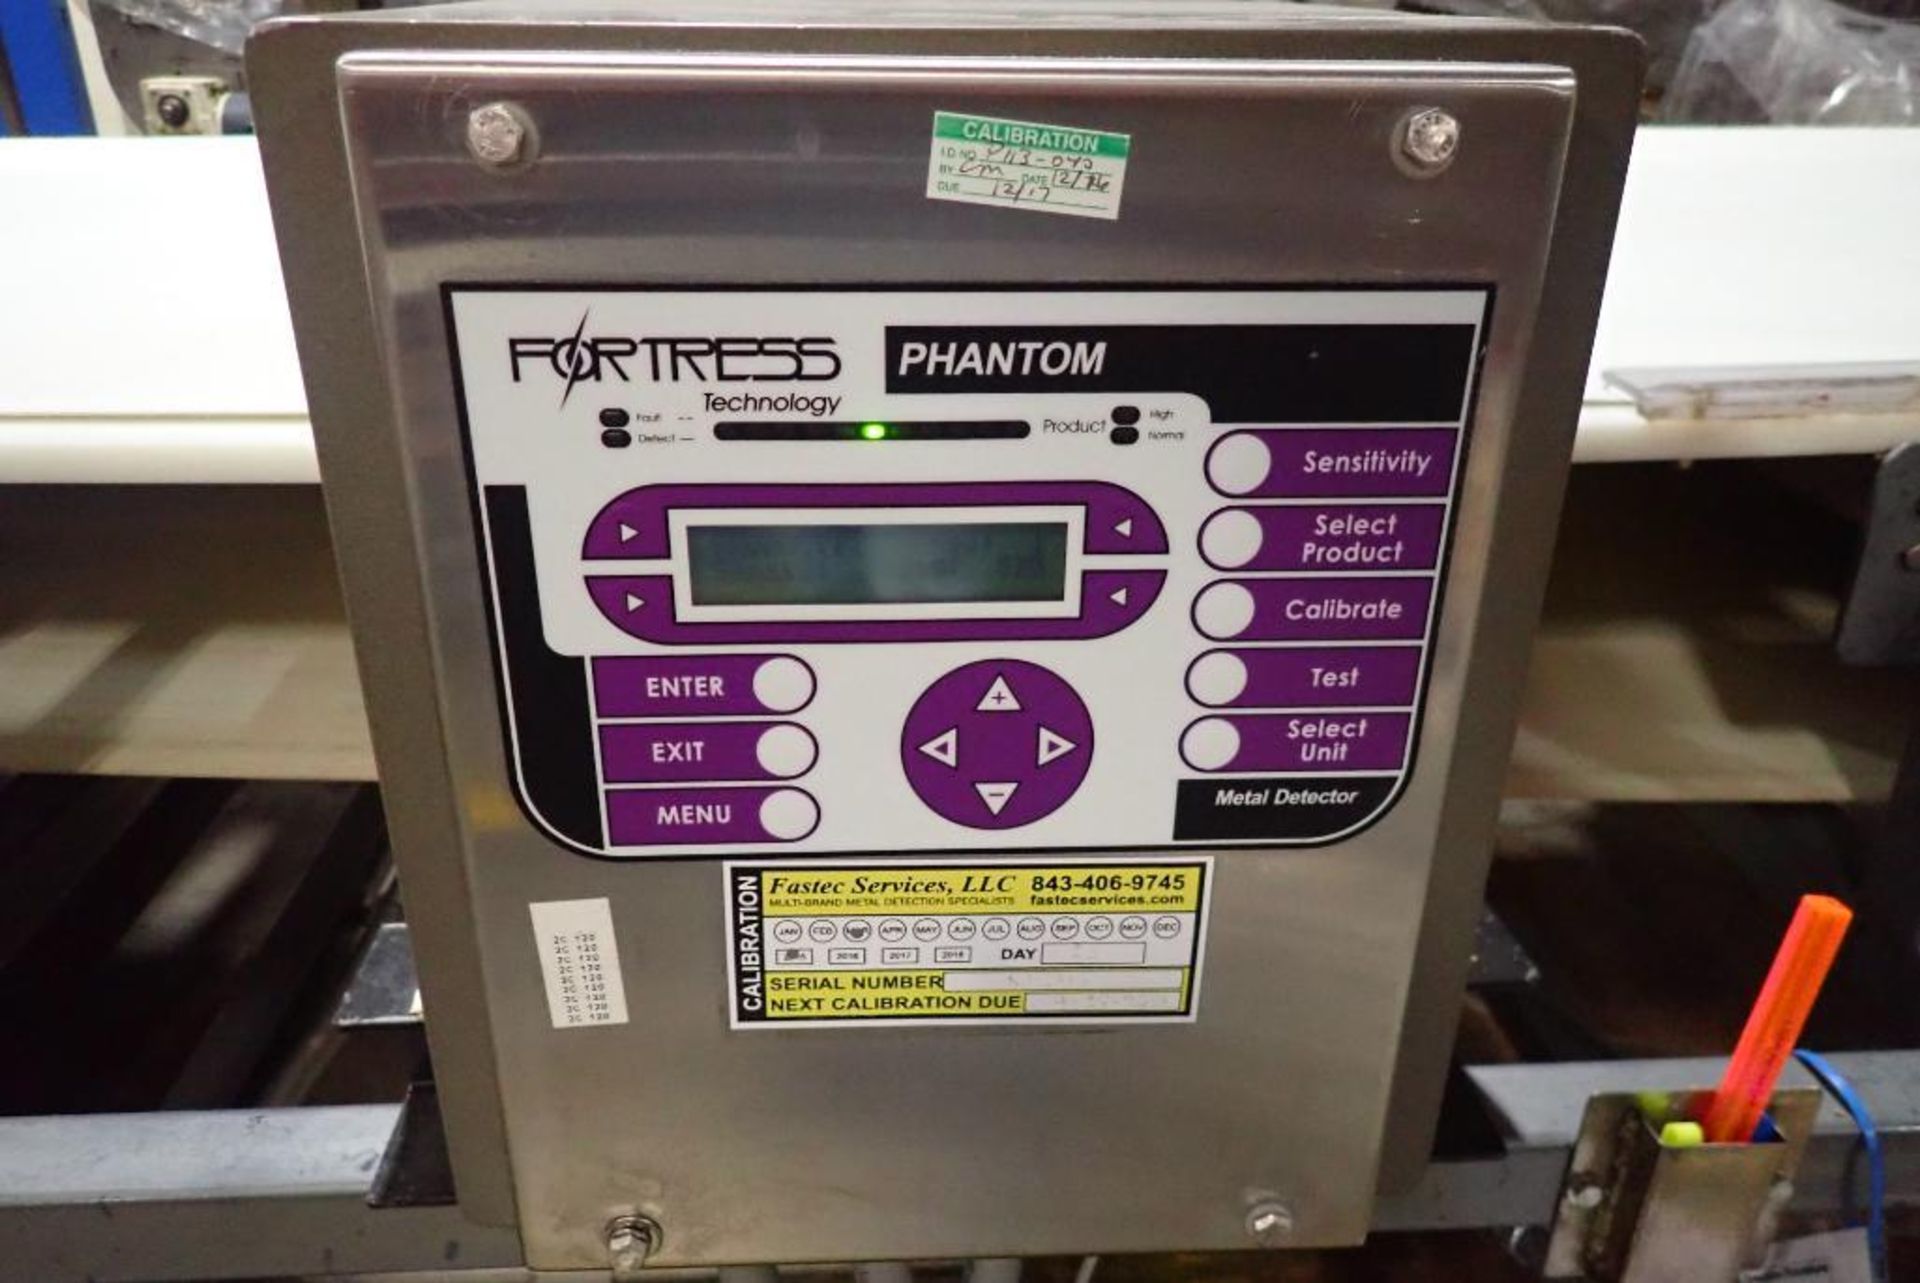 Fortress phantom metal detector with conveyor - Image 11 of 14